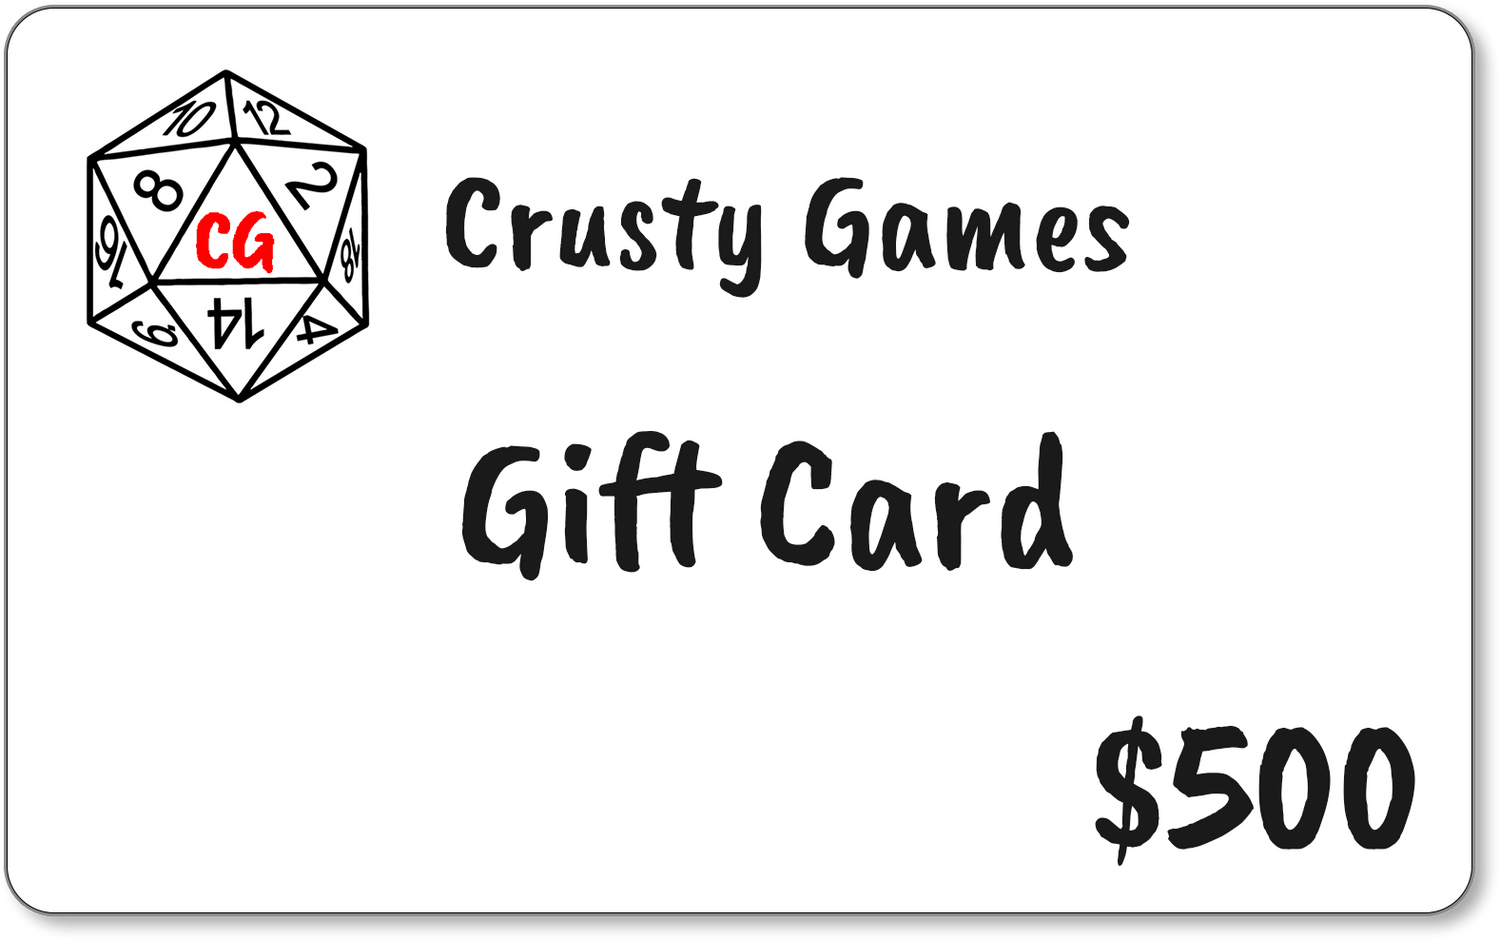 Crusty Games Gift Card - Crusty Games